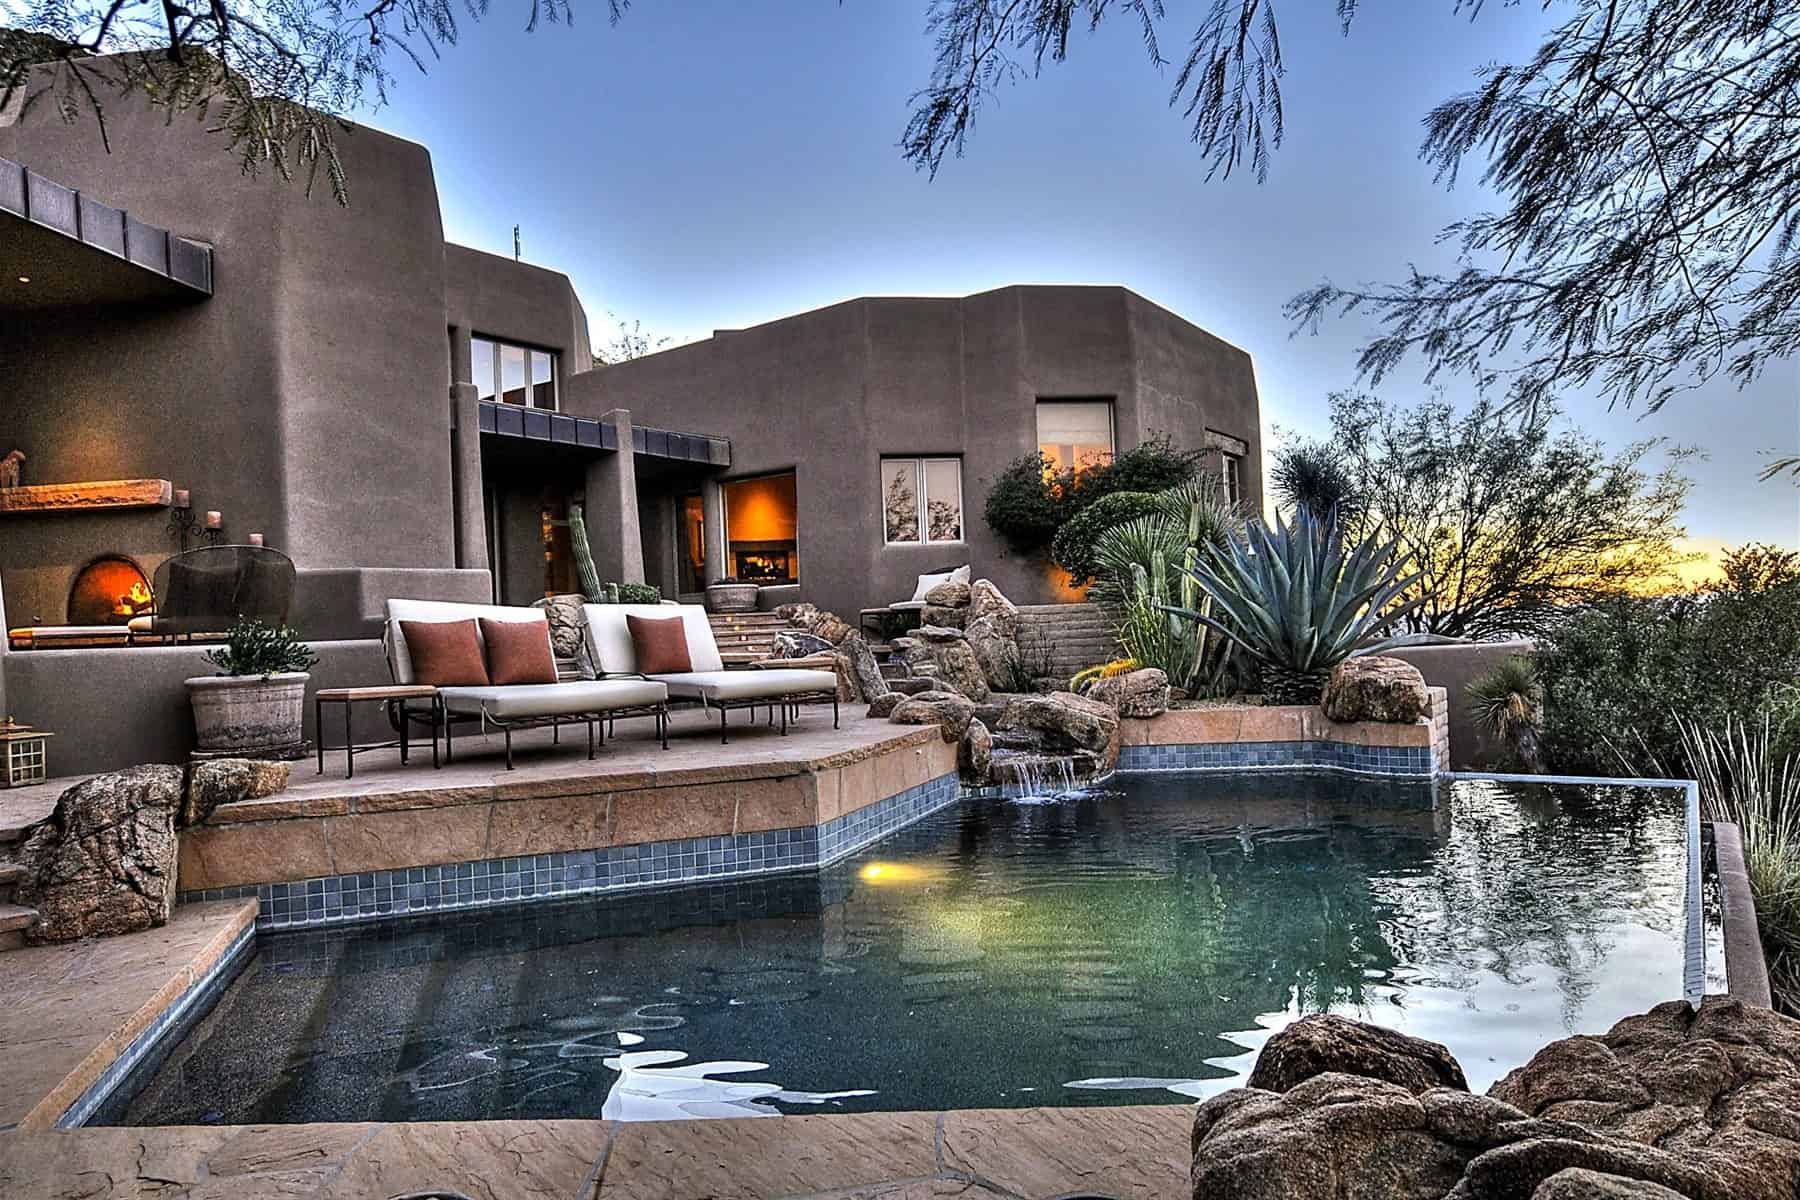 arizona-desert-house-with-fascinating-pools-1.jpg (1800Ã1200)